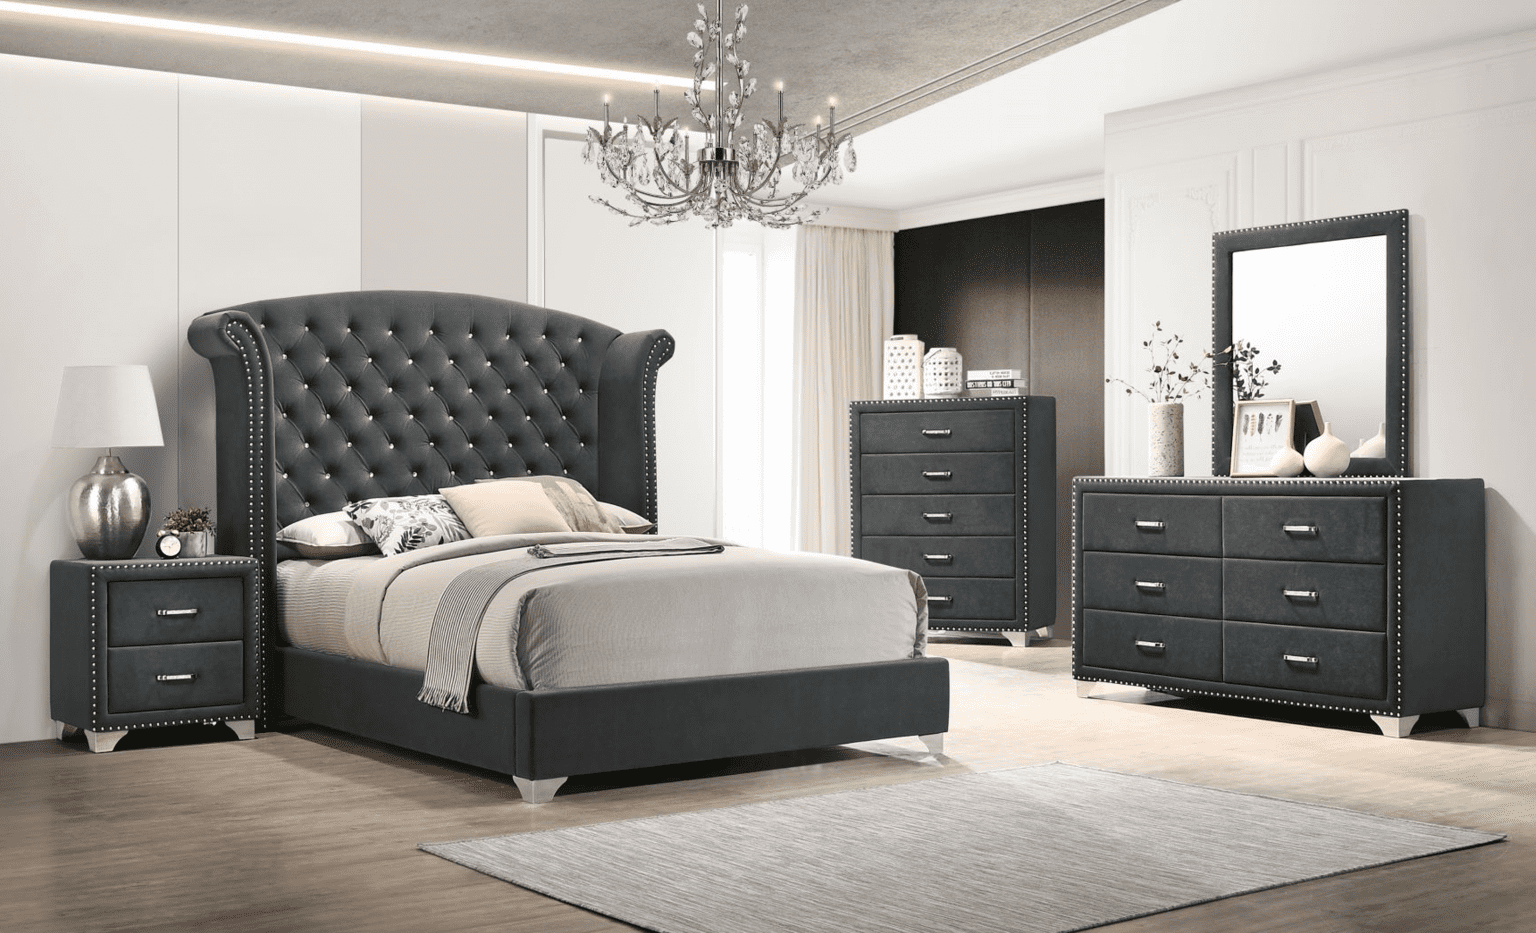 complete bedroom furniture price